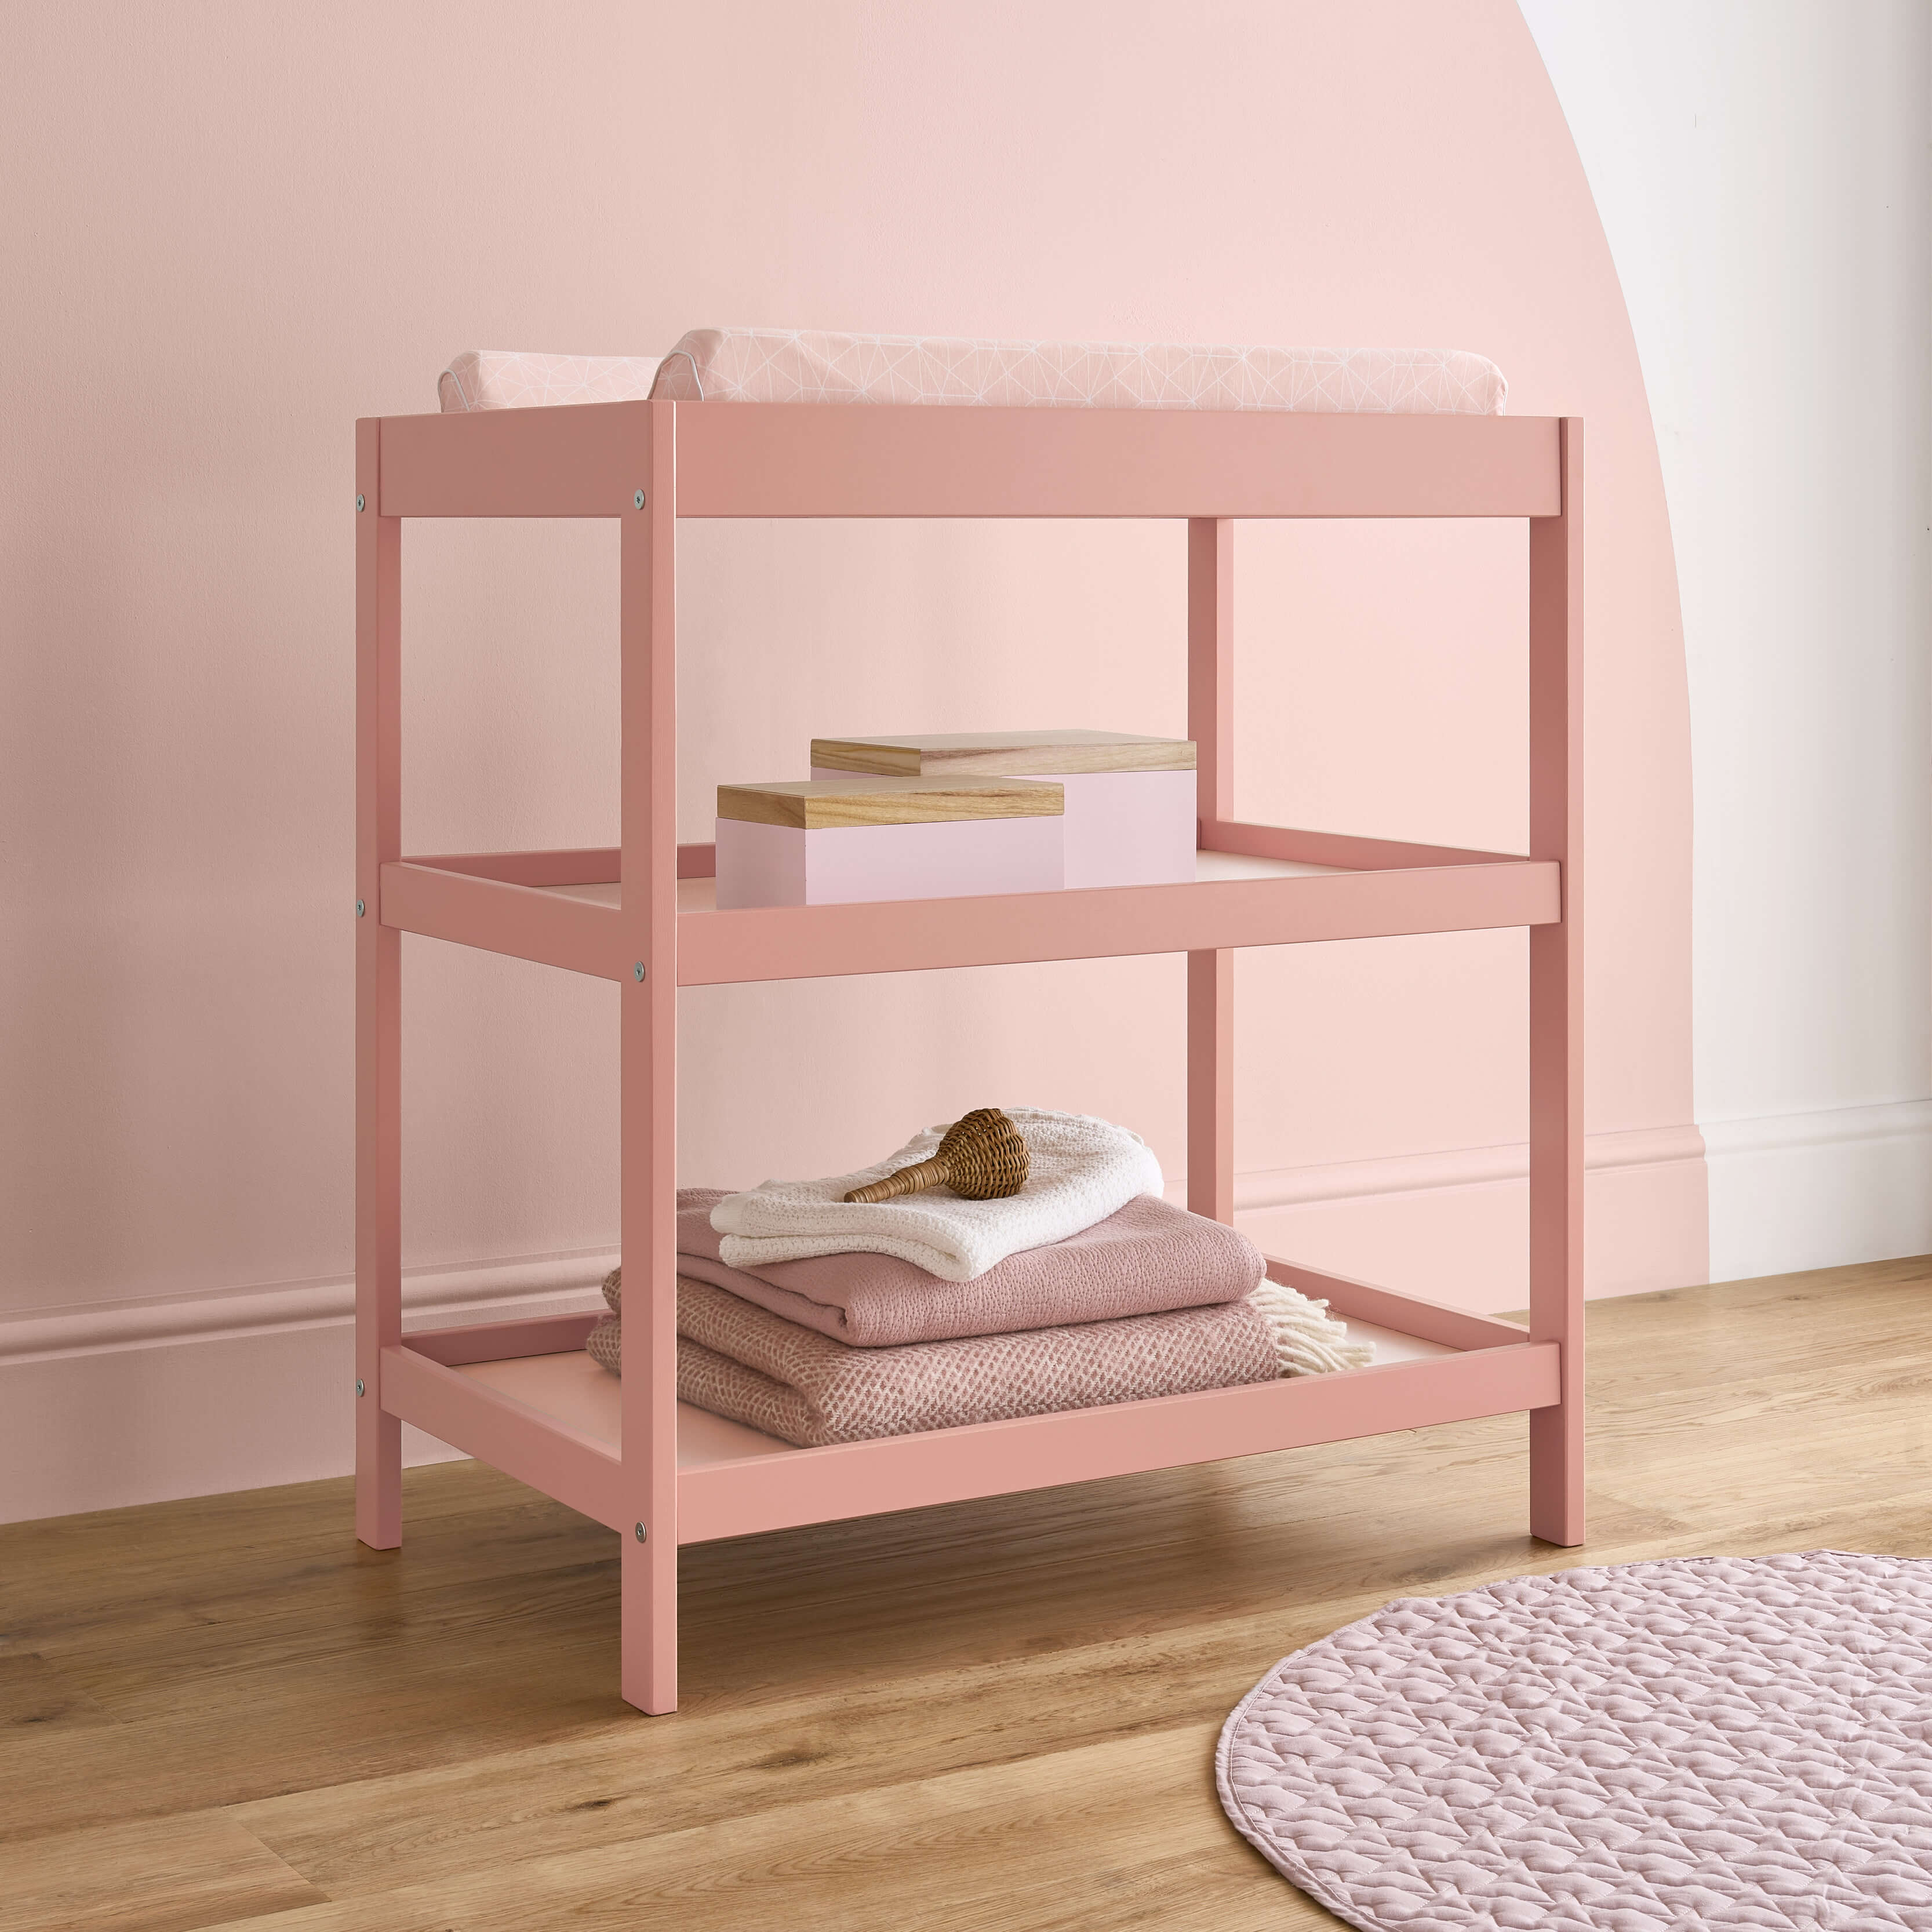 CuddleCo Nola 2 Piece Room Set in Soft Blush Nursery Room Sets